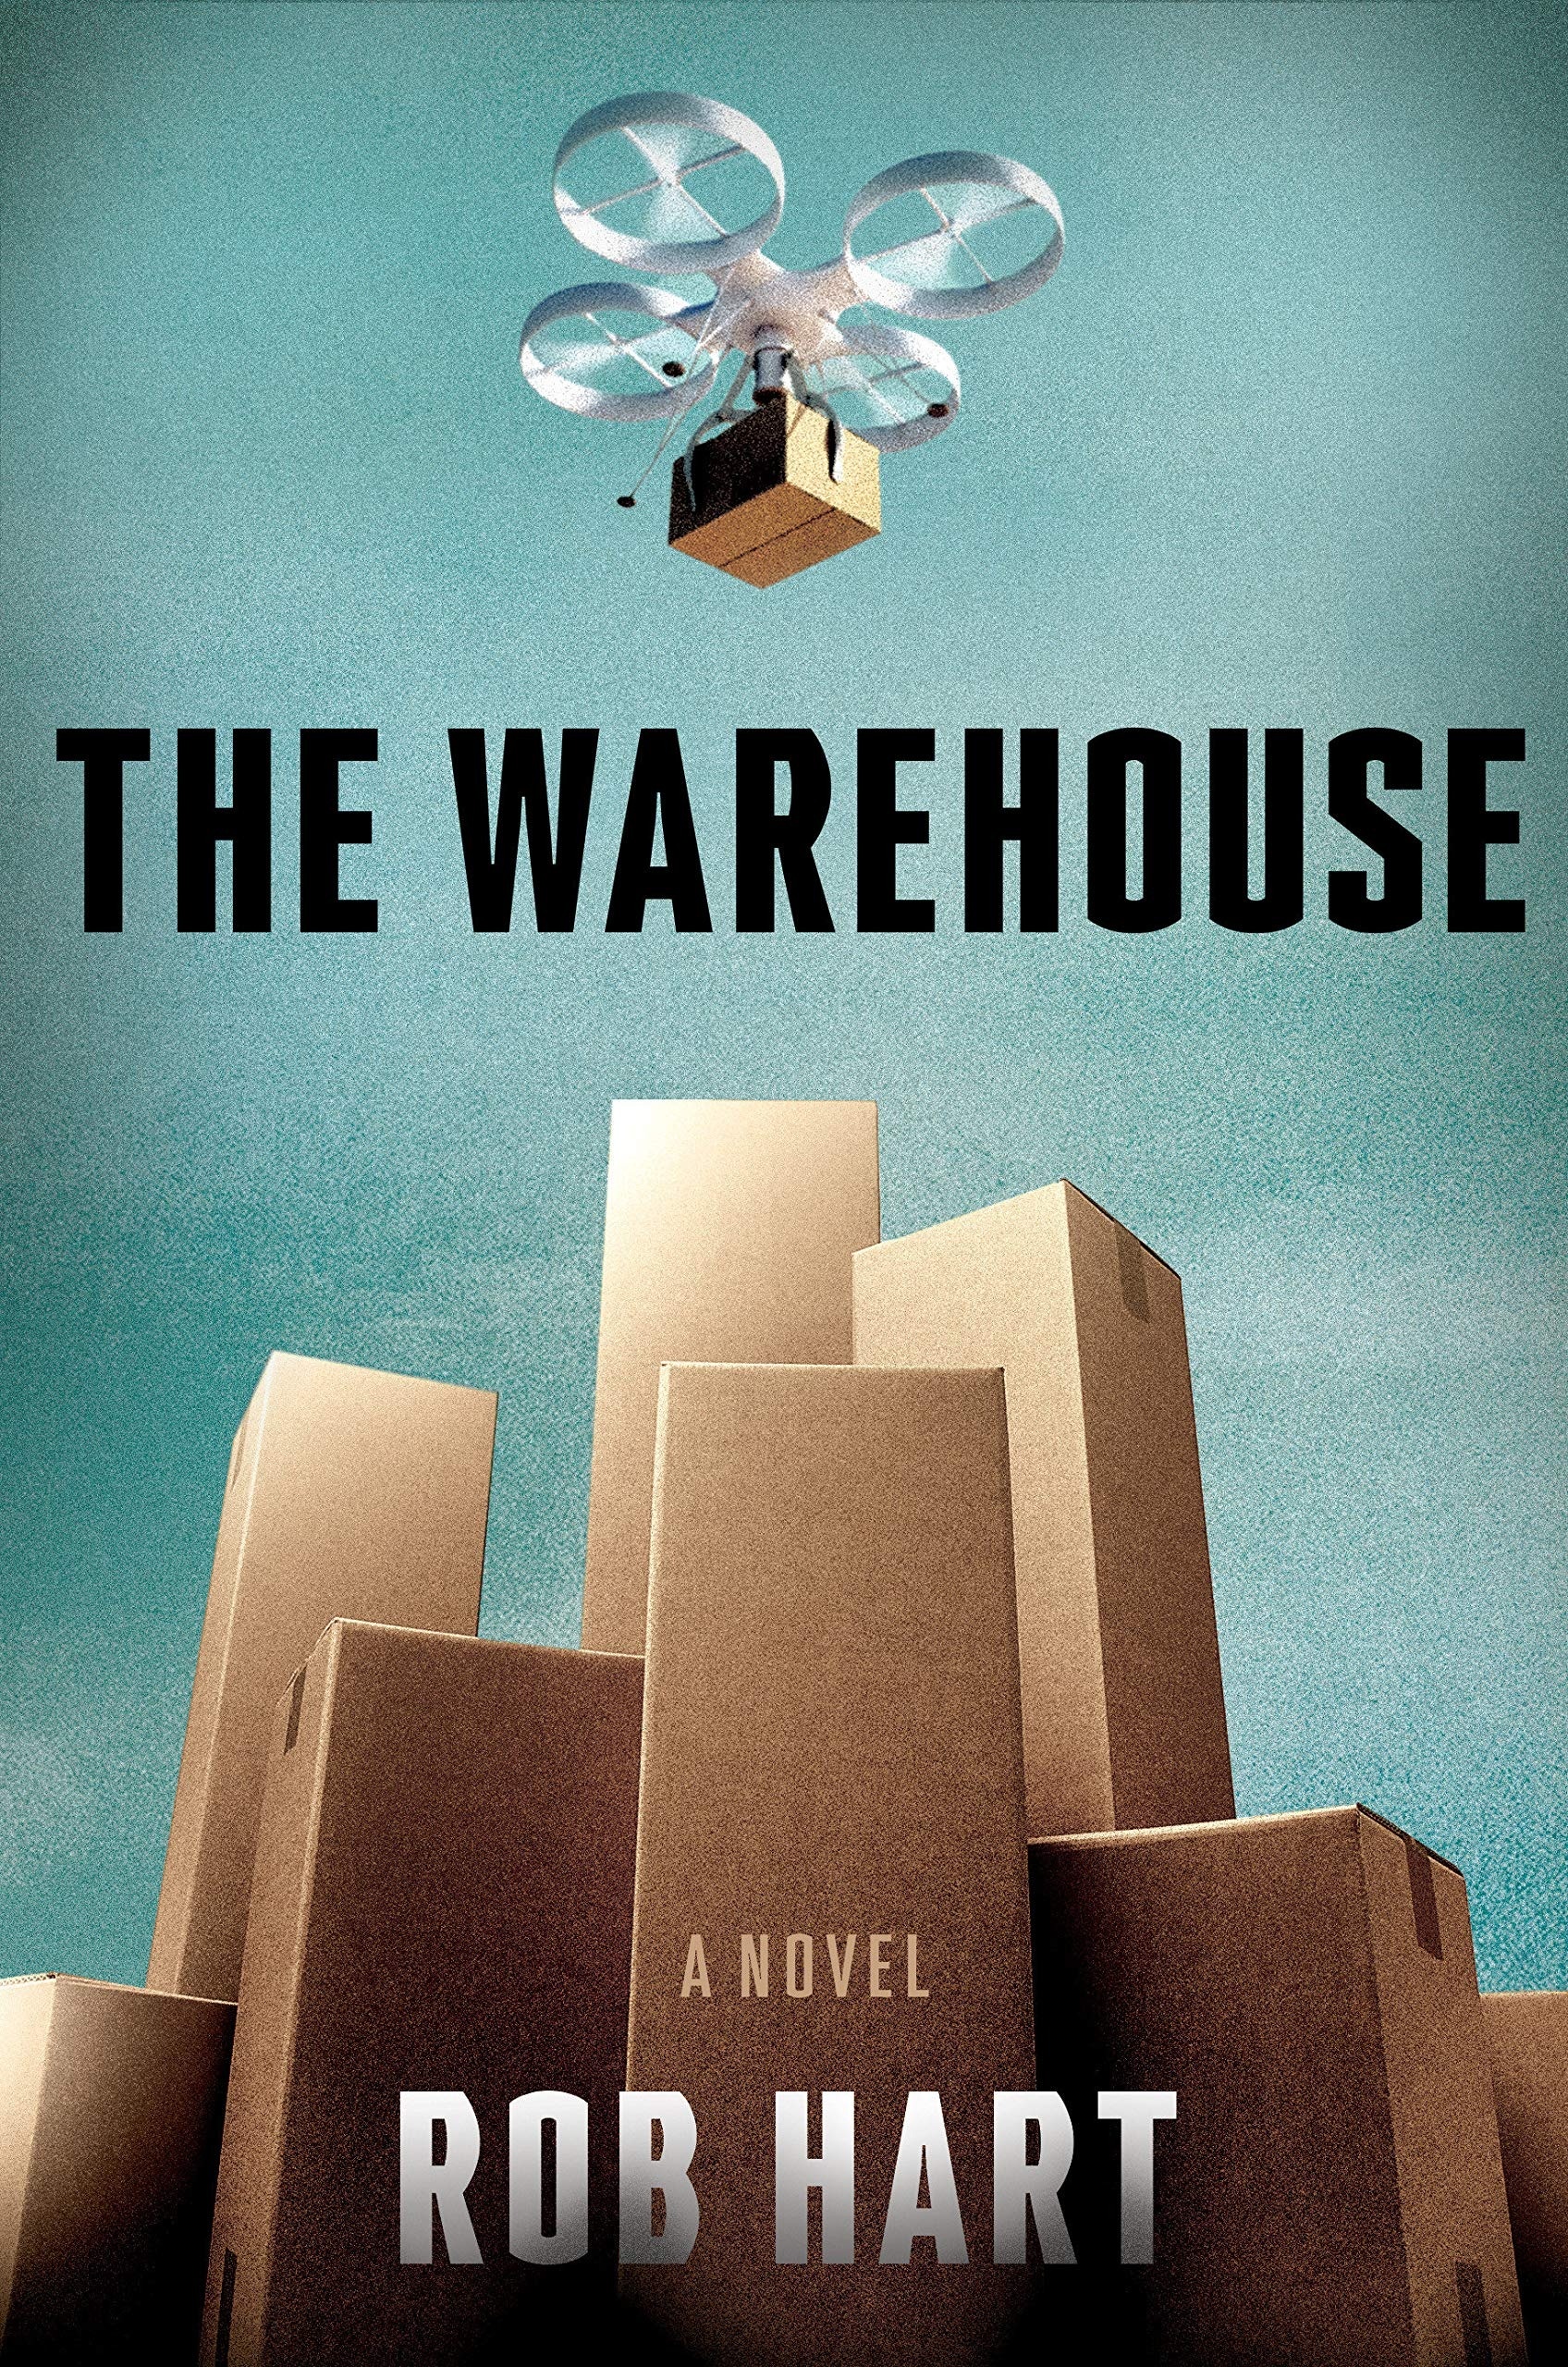 rob hart the warehouse - The Warehouse A Novel Rob Hart